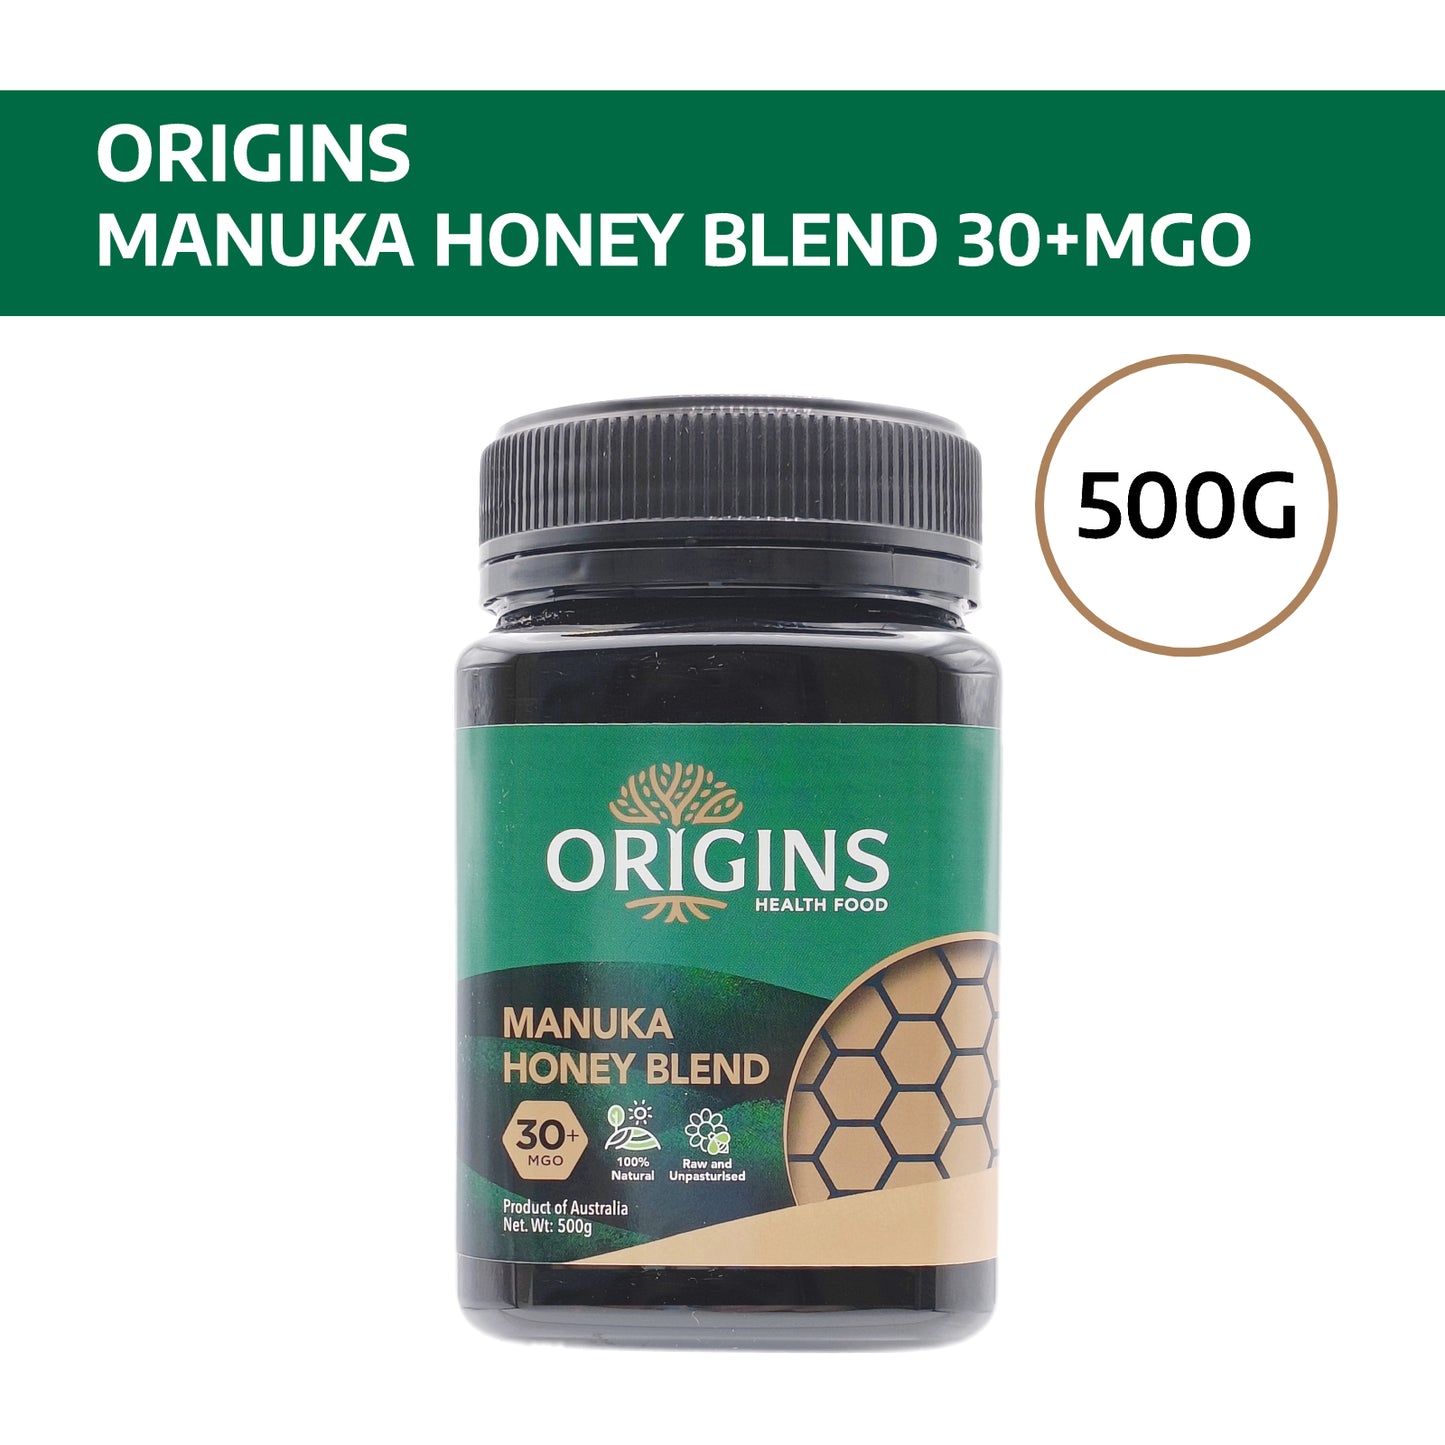 Origins Health Food Manuka Honey Blend MG30+ Australia 500G - Bloom Concept